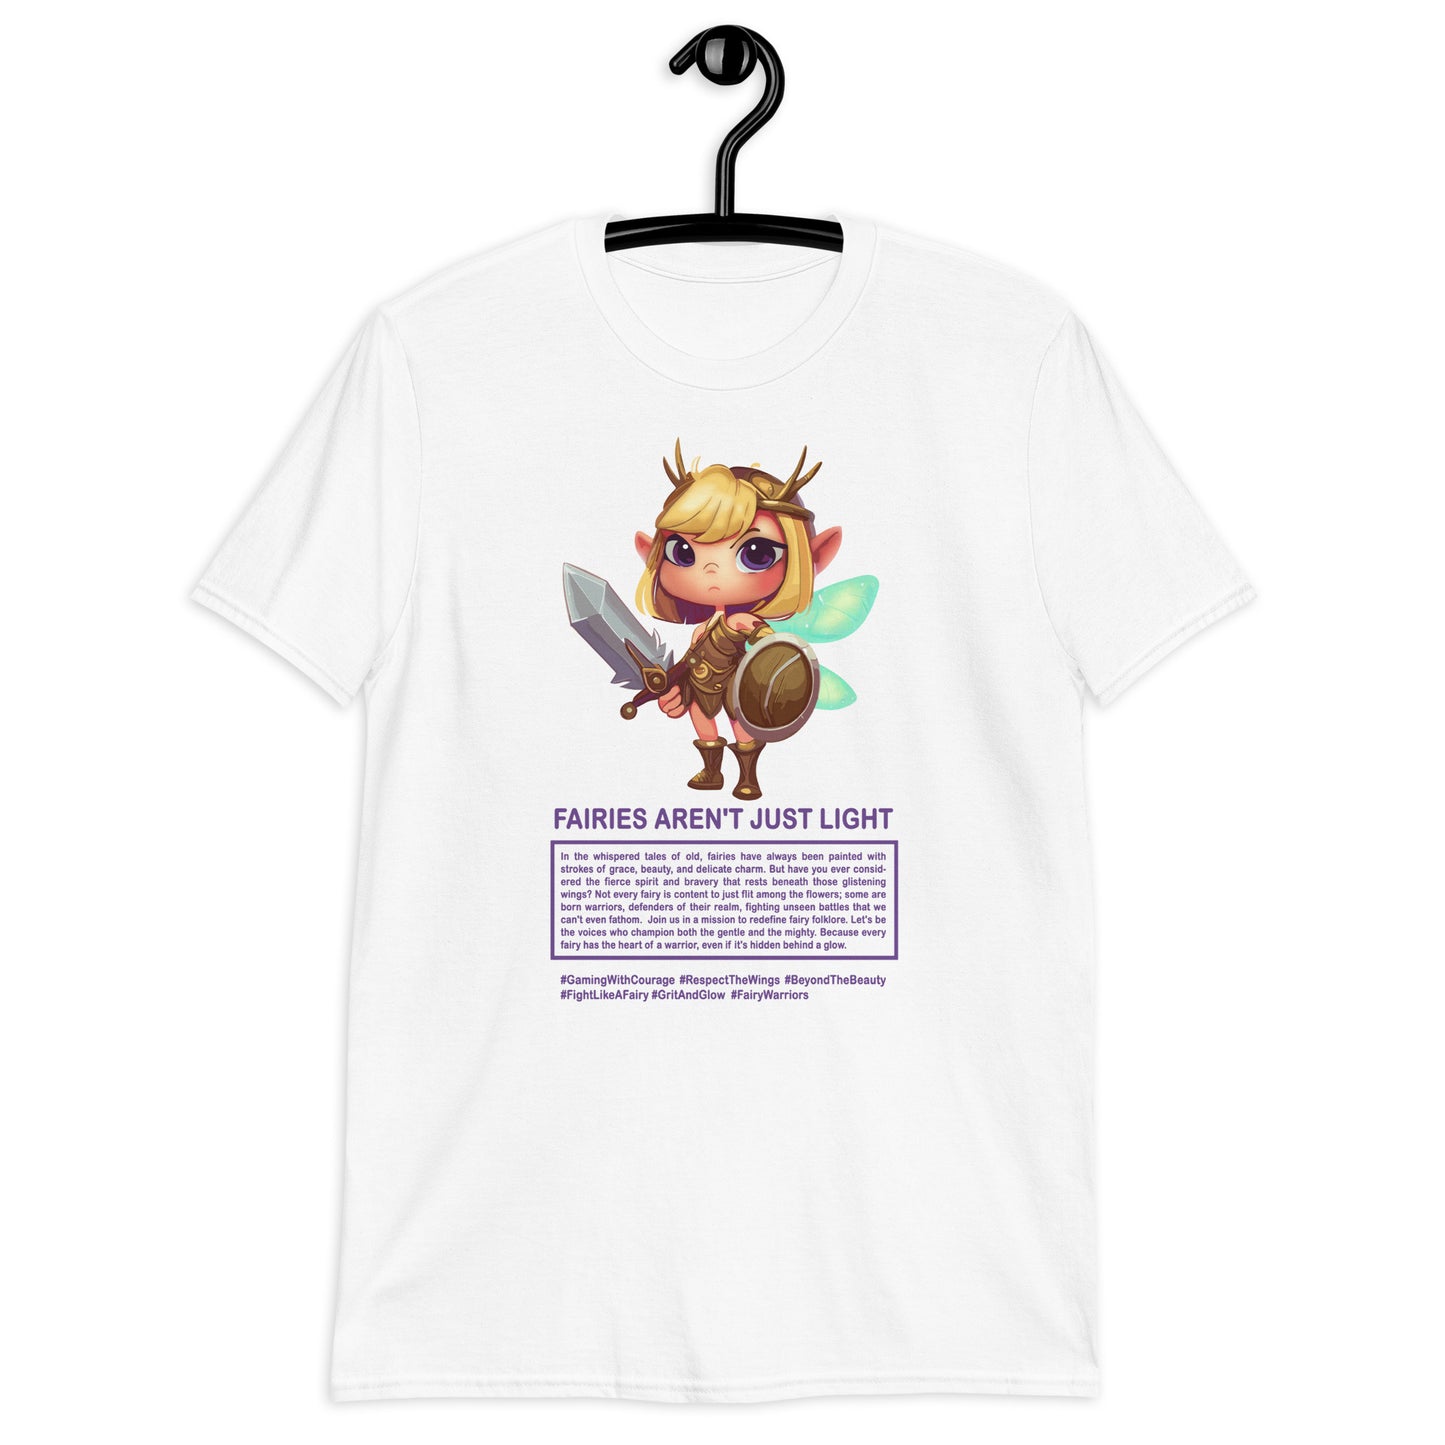 Fairies Are't Just Light" Camiseta de hada guerrera para jugadores